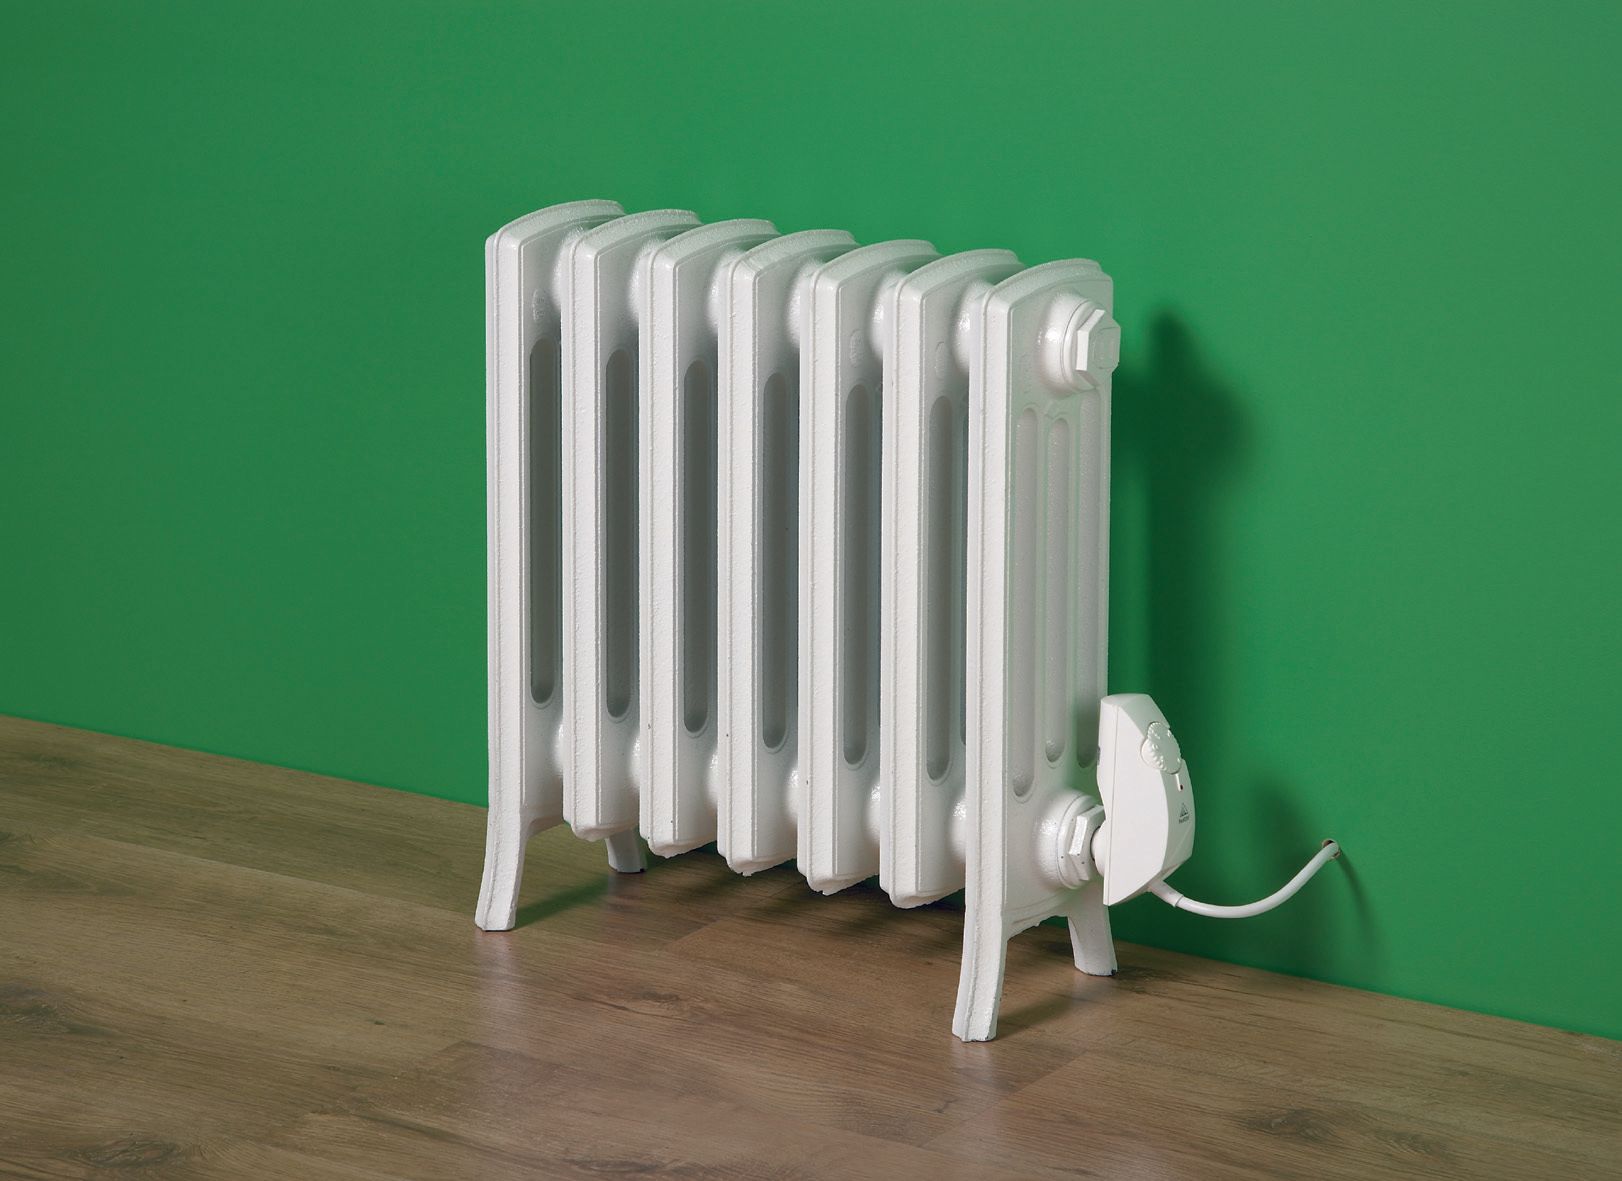 Electric Etonian cast iron radiator in white